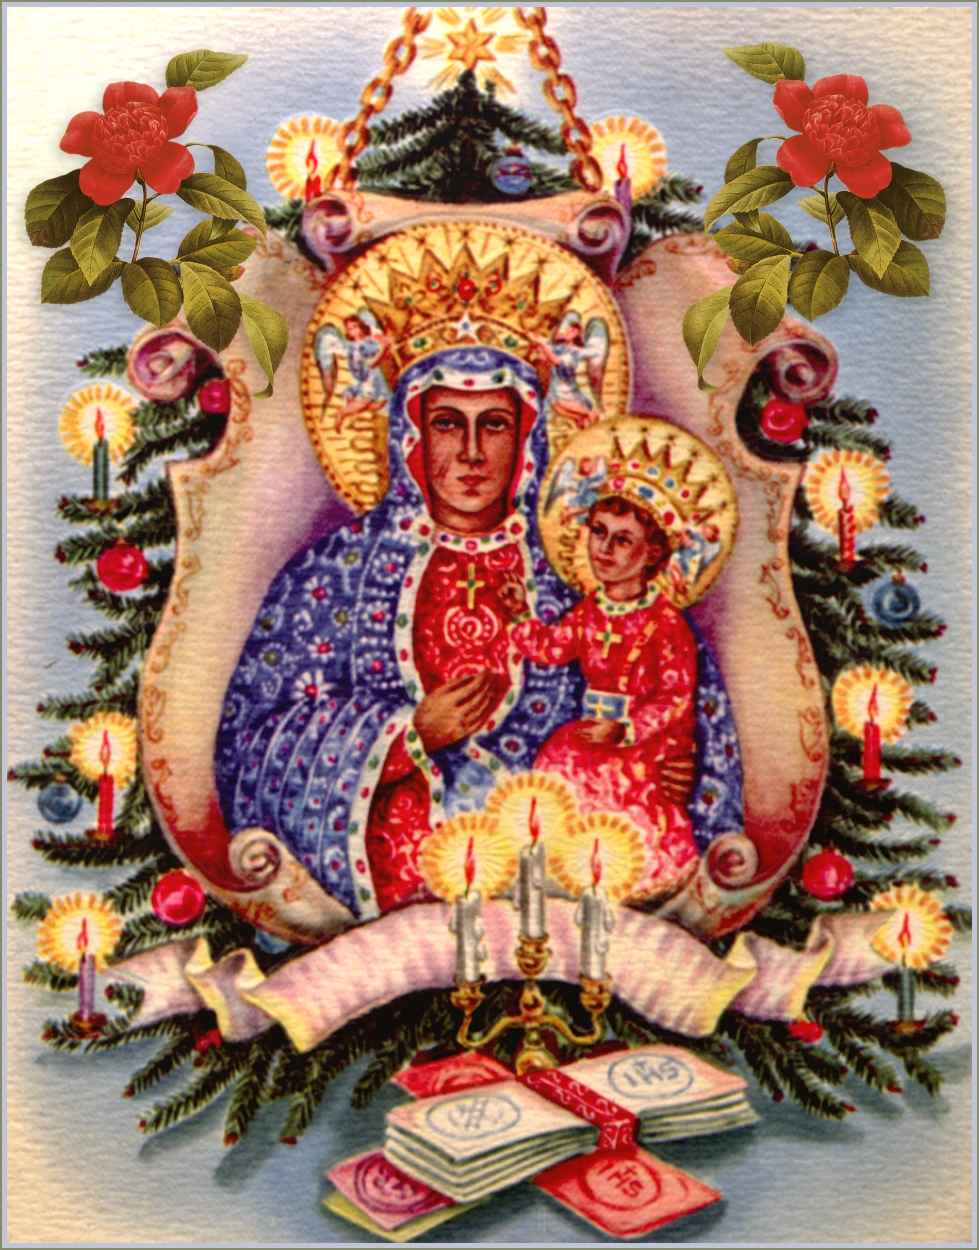 OUR LADY OF CZESTOCHOWA CHRISTMAS IMAGE